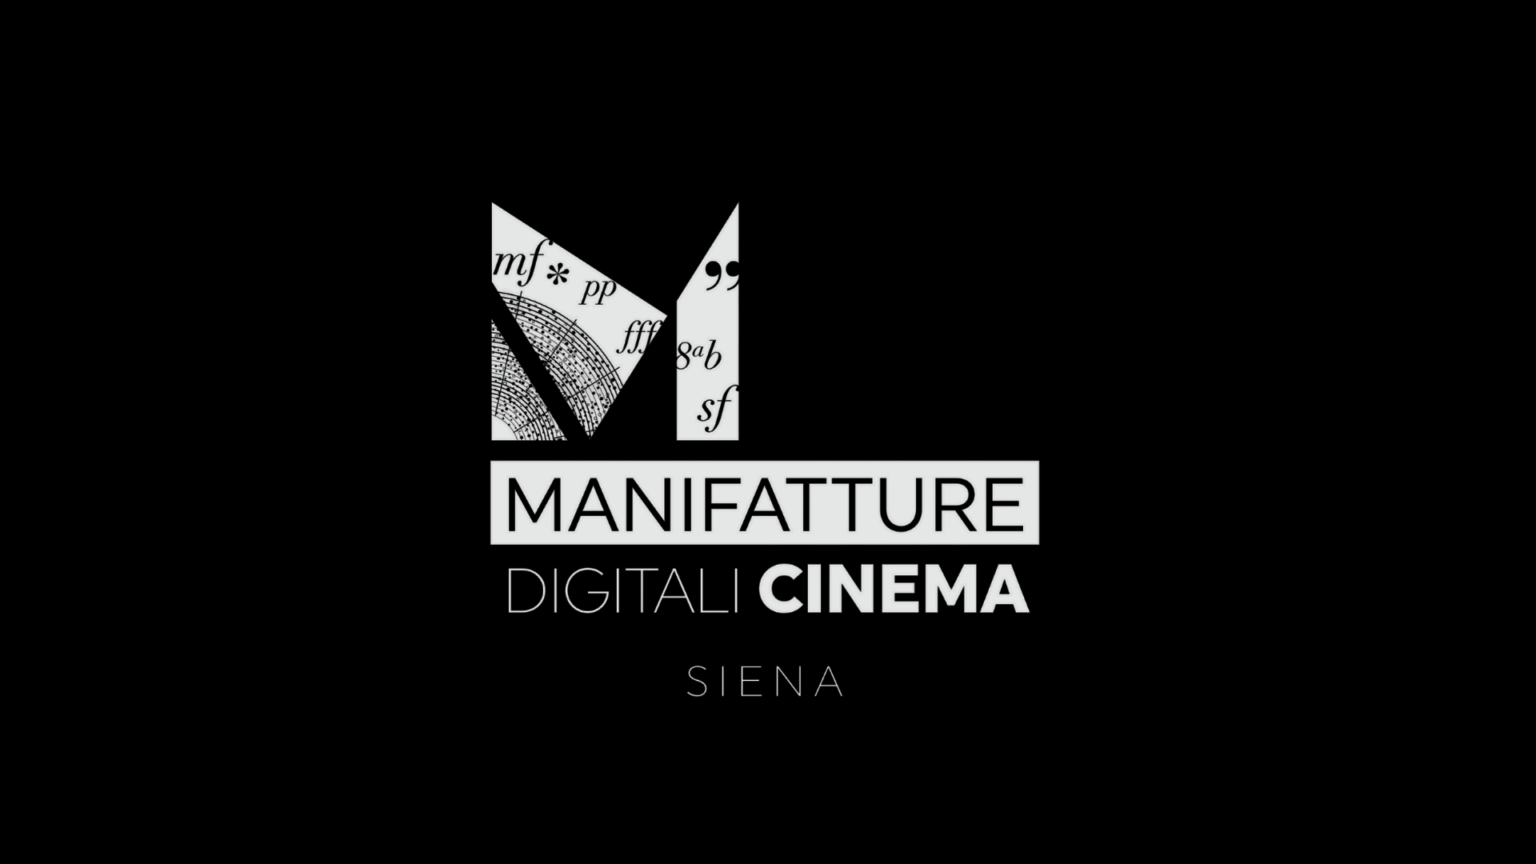 Manifatture Digitali Cinema Siena